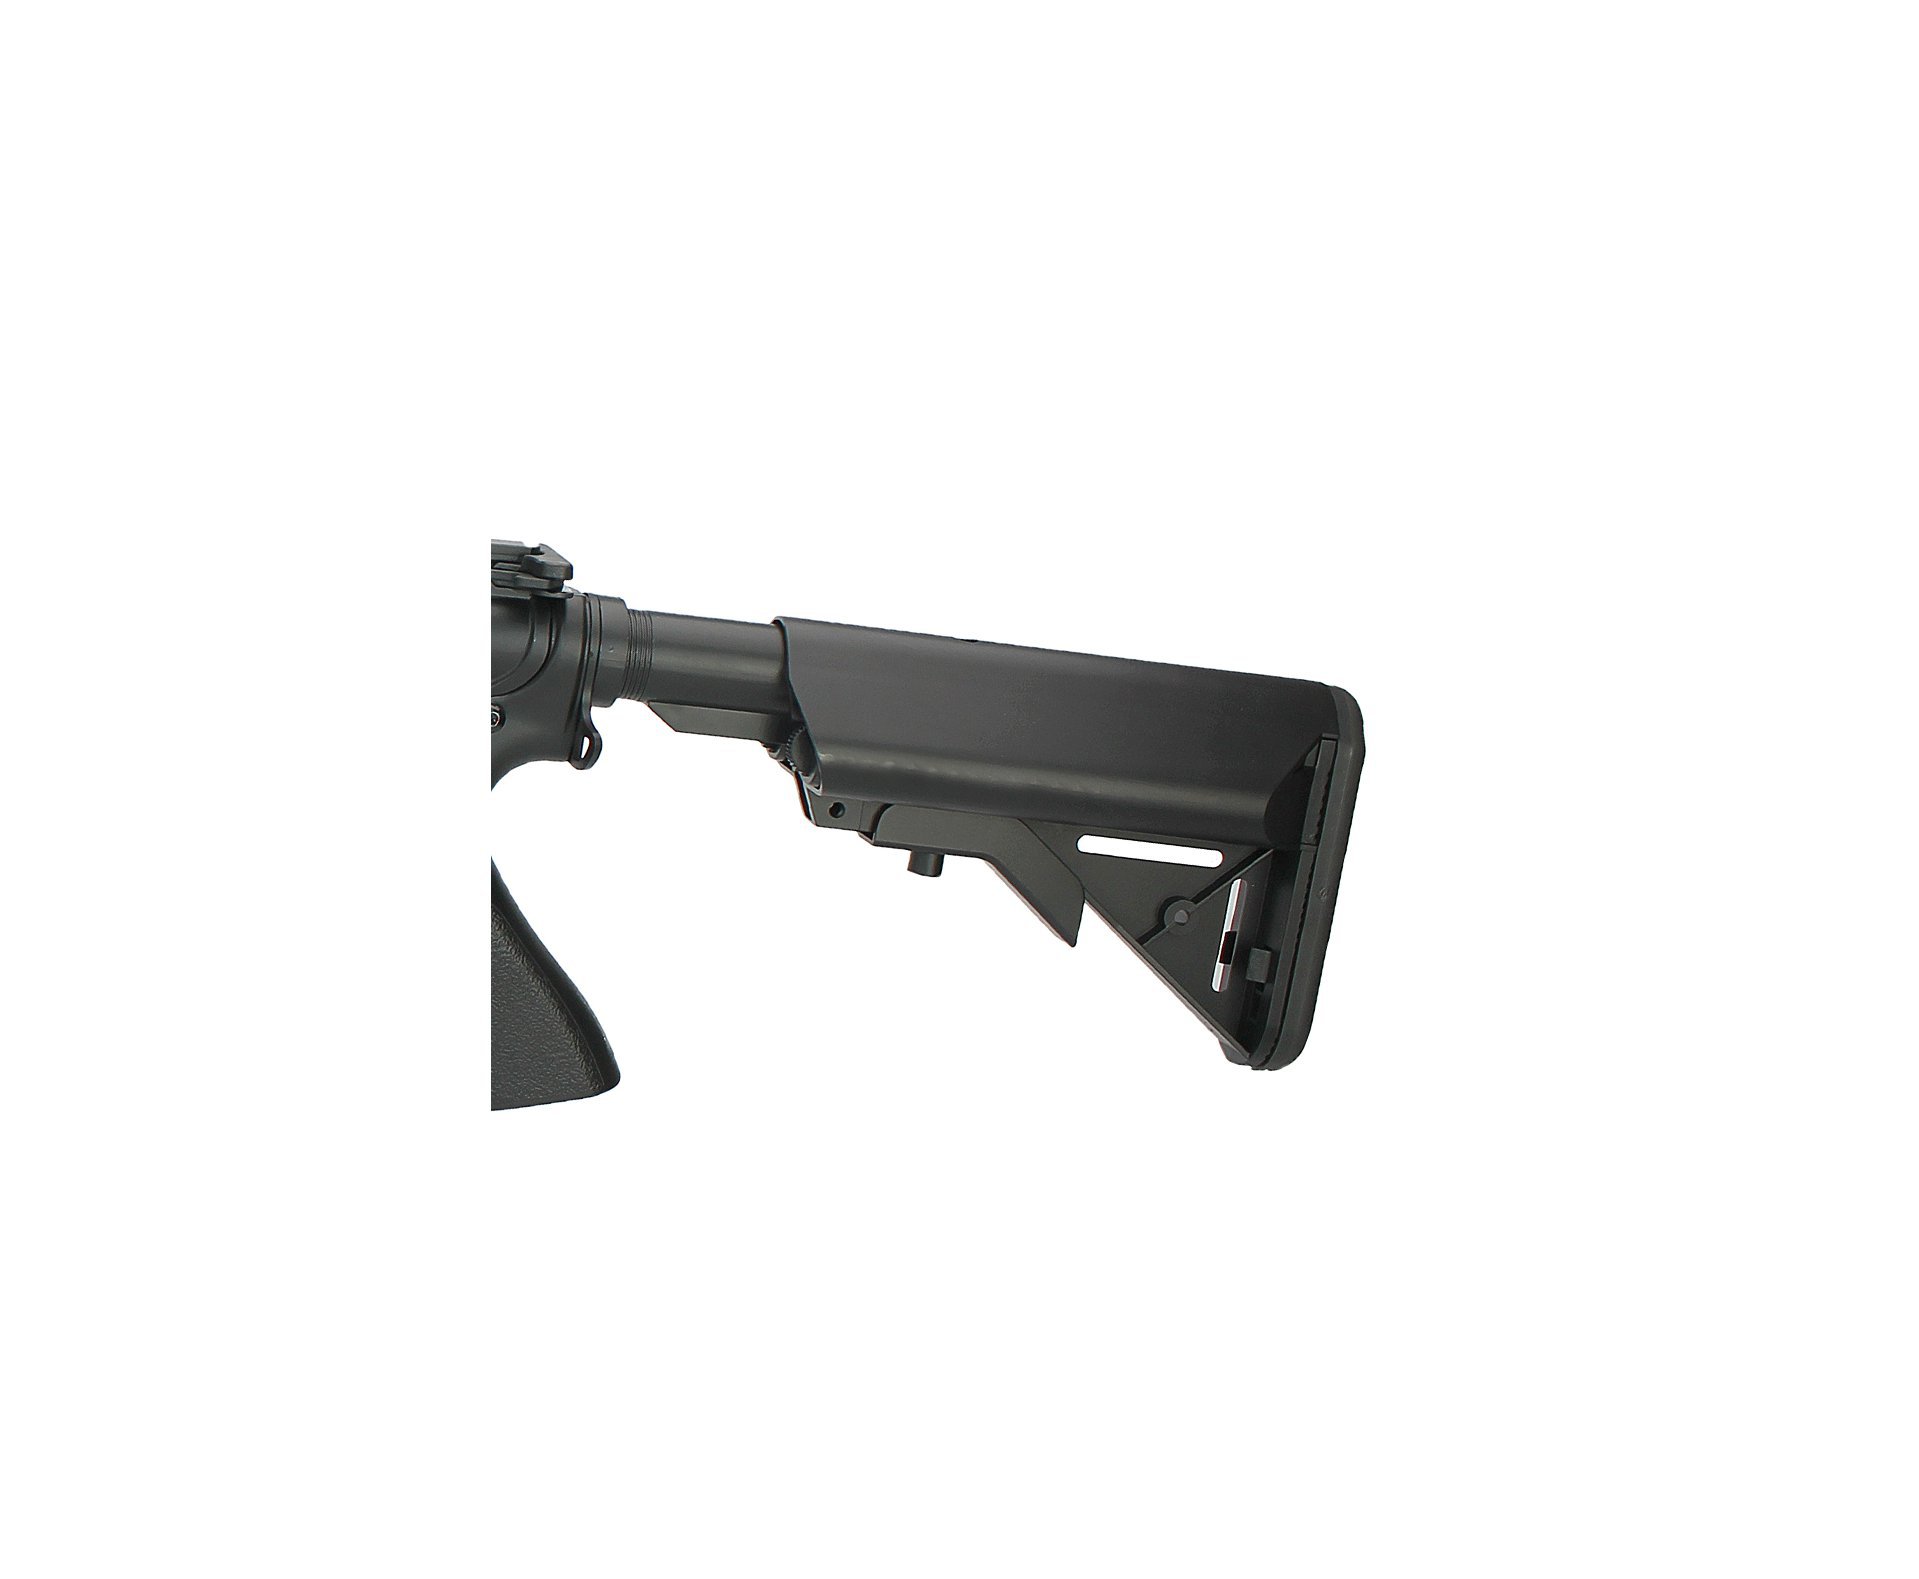 Rifle De Airsoft M4a1 Keymod Cm518 Black - Cal 6mm- Bivolt- Cm518 - Cyma